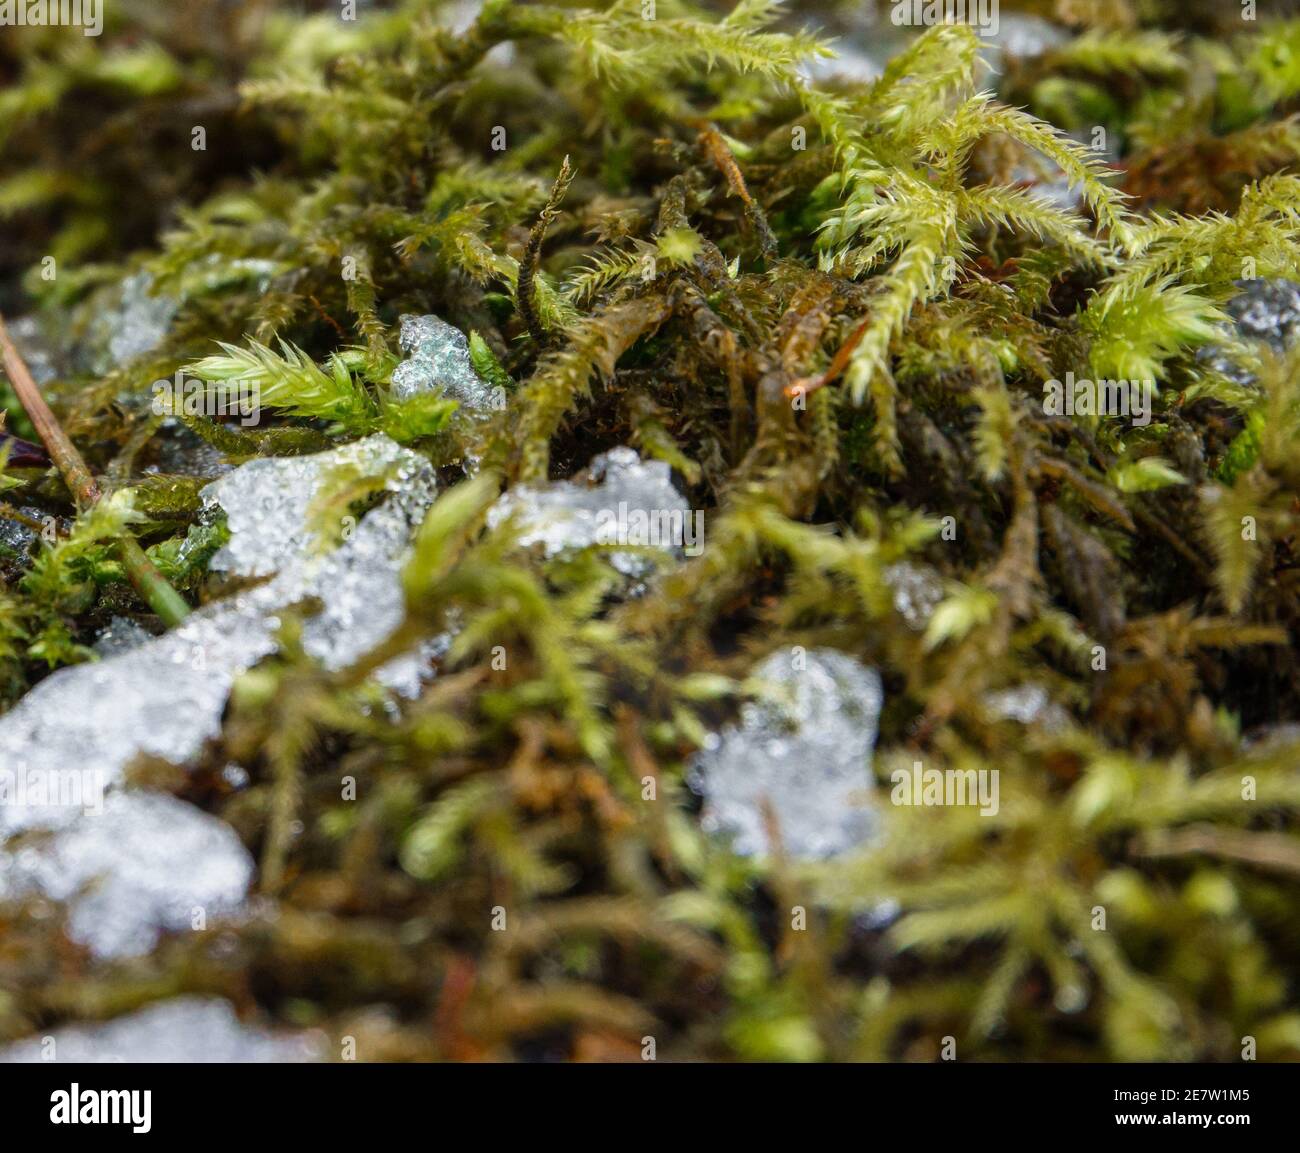 frozen ice crystals amongst green lichen Stock Photo